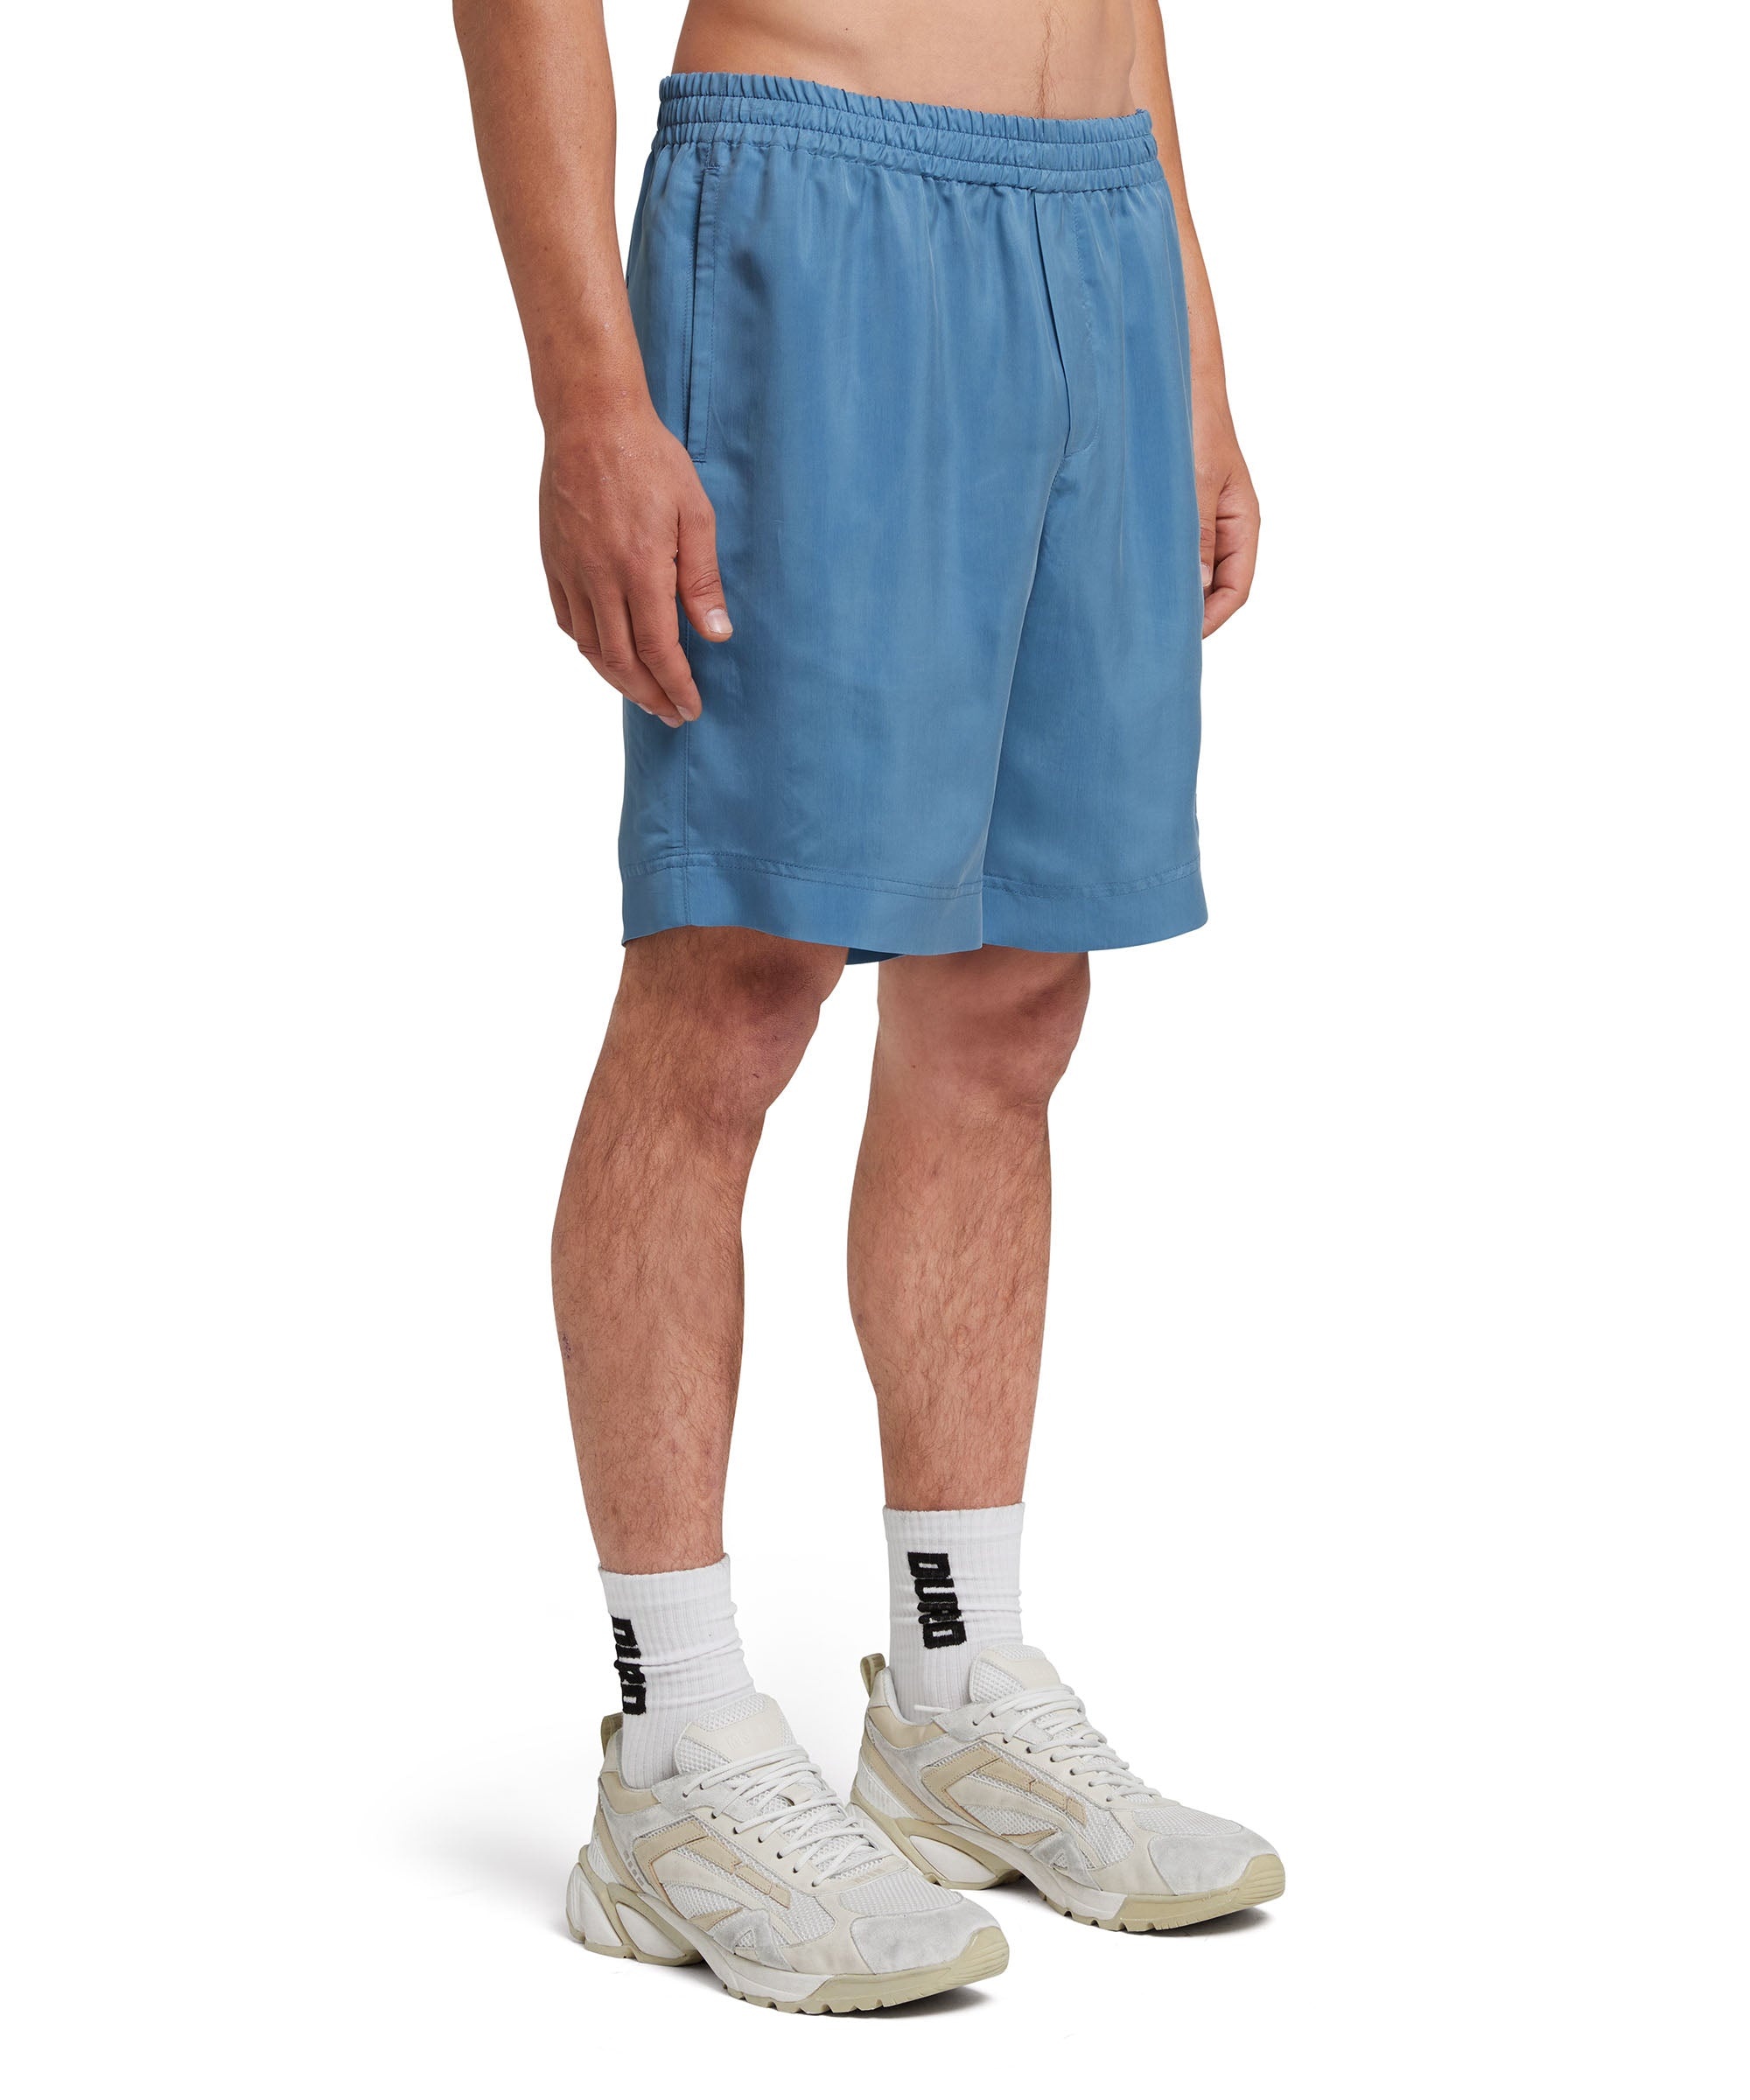 Cupro shorts - 4